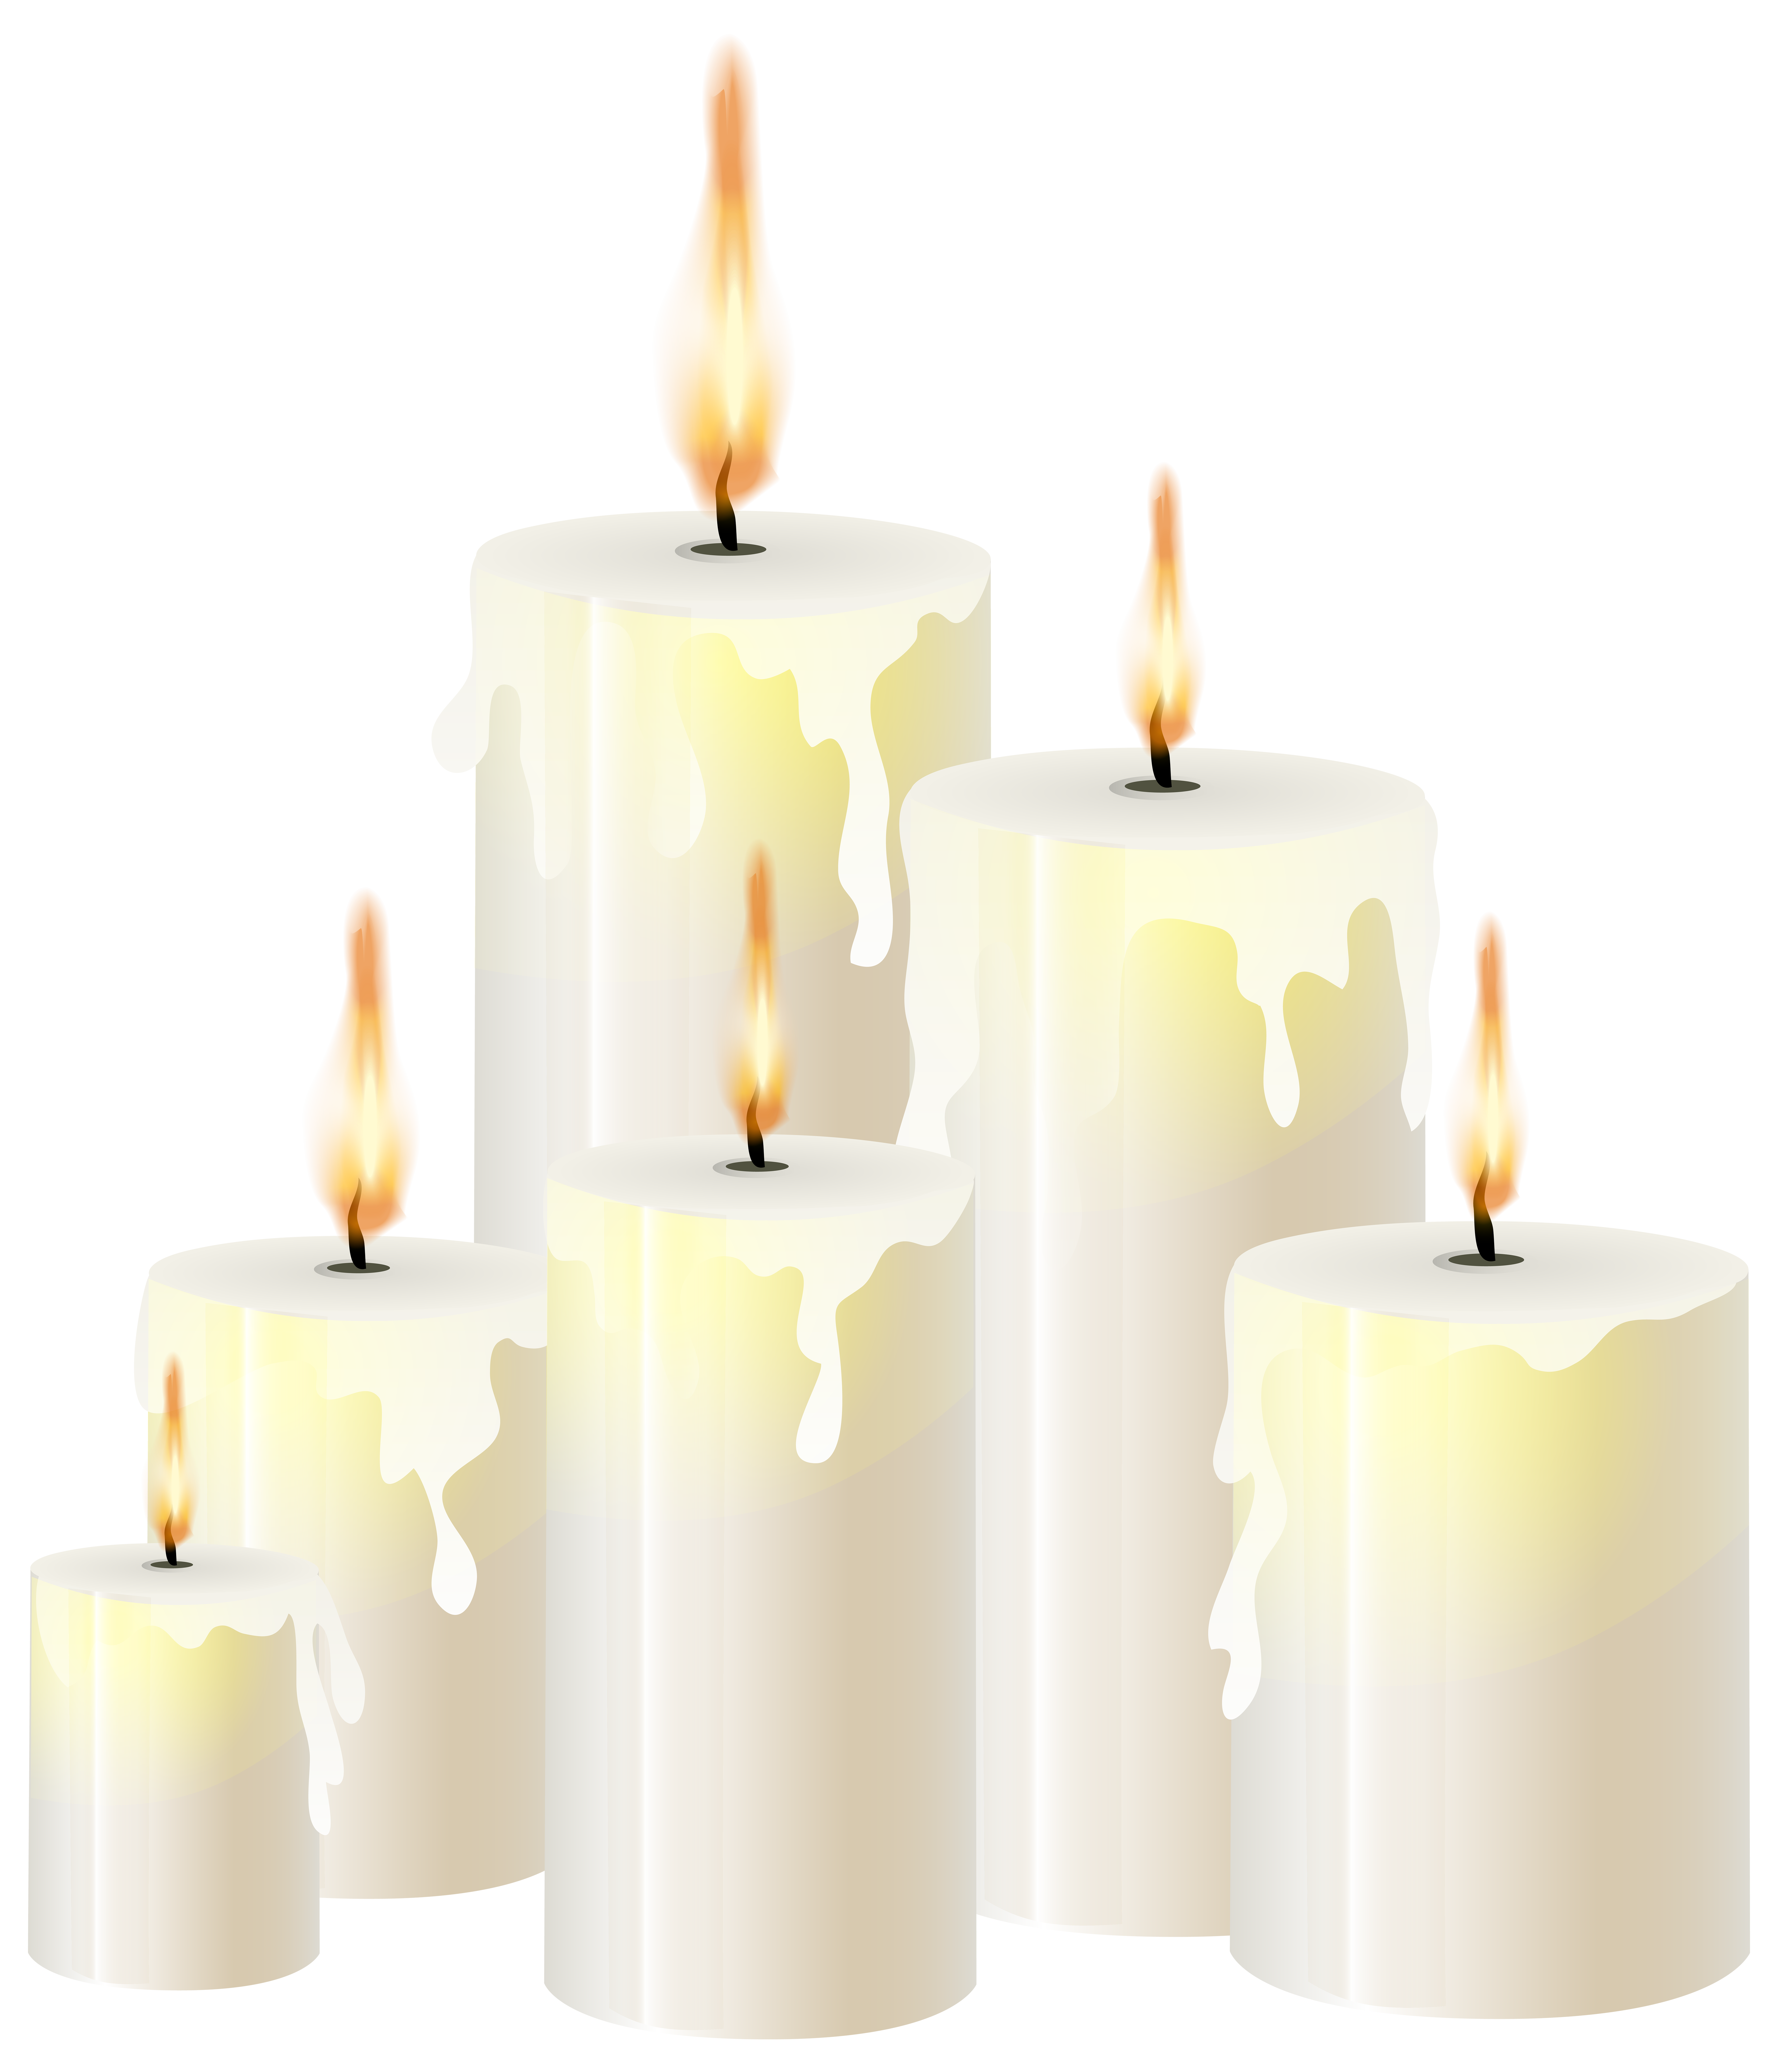 White Candles PNG Clip Art - Best WEB Clipart